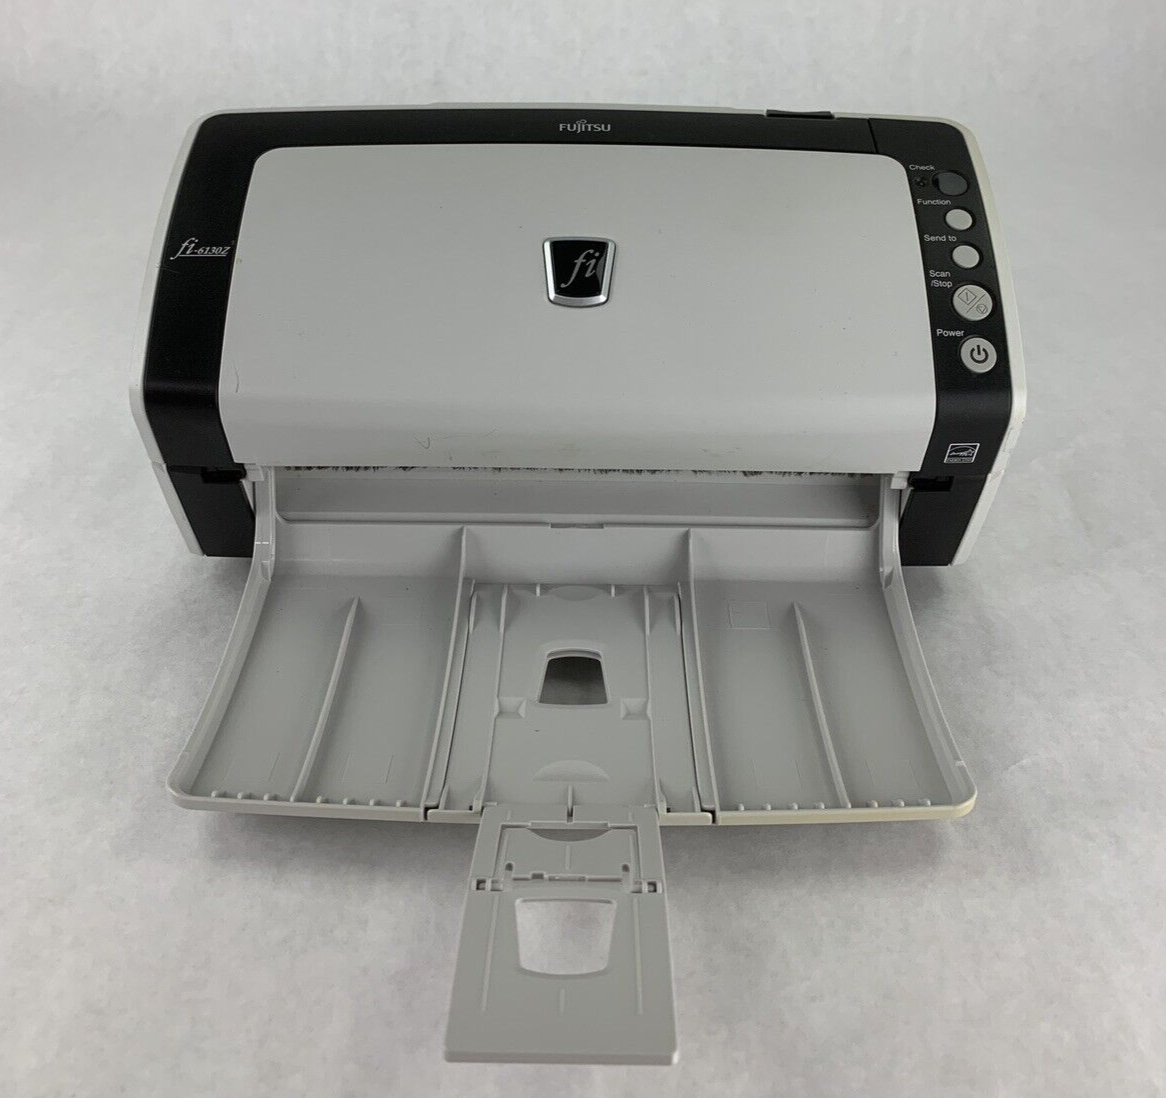 Fujitsu fi-6130z Duplex Color Sheet-Fed Document Scanner Tested No Paper Guide